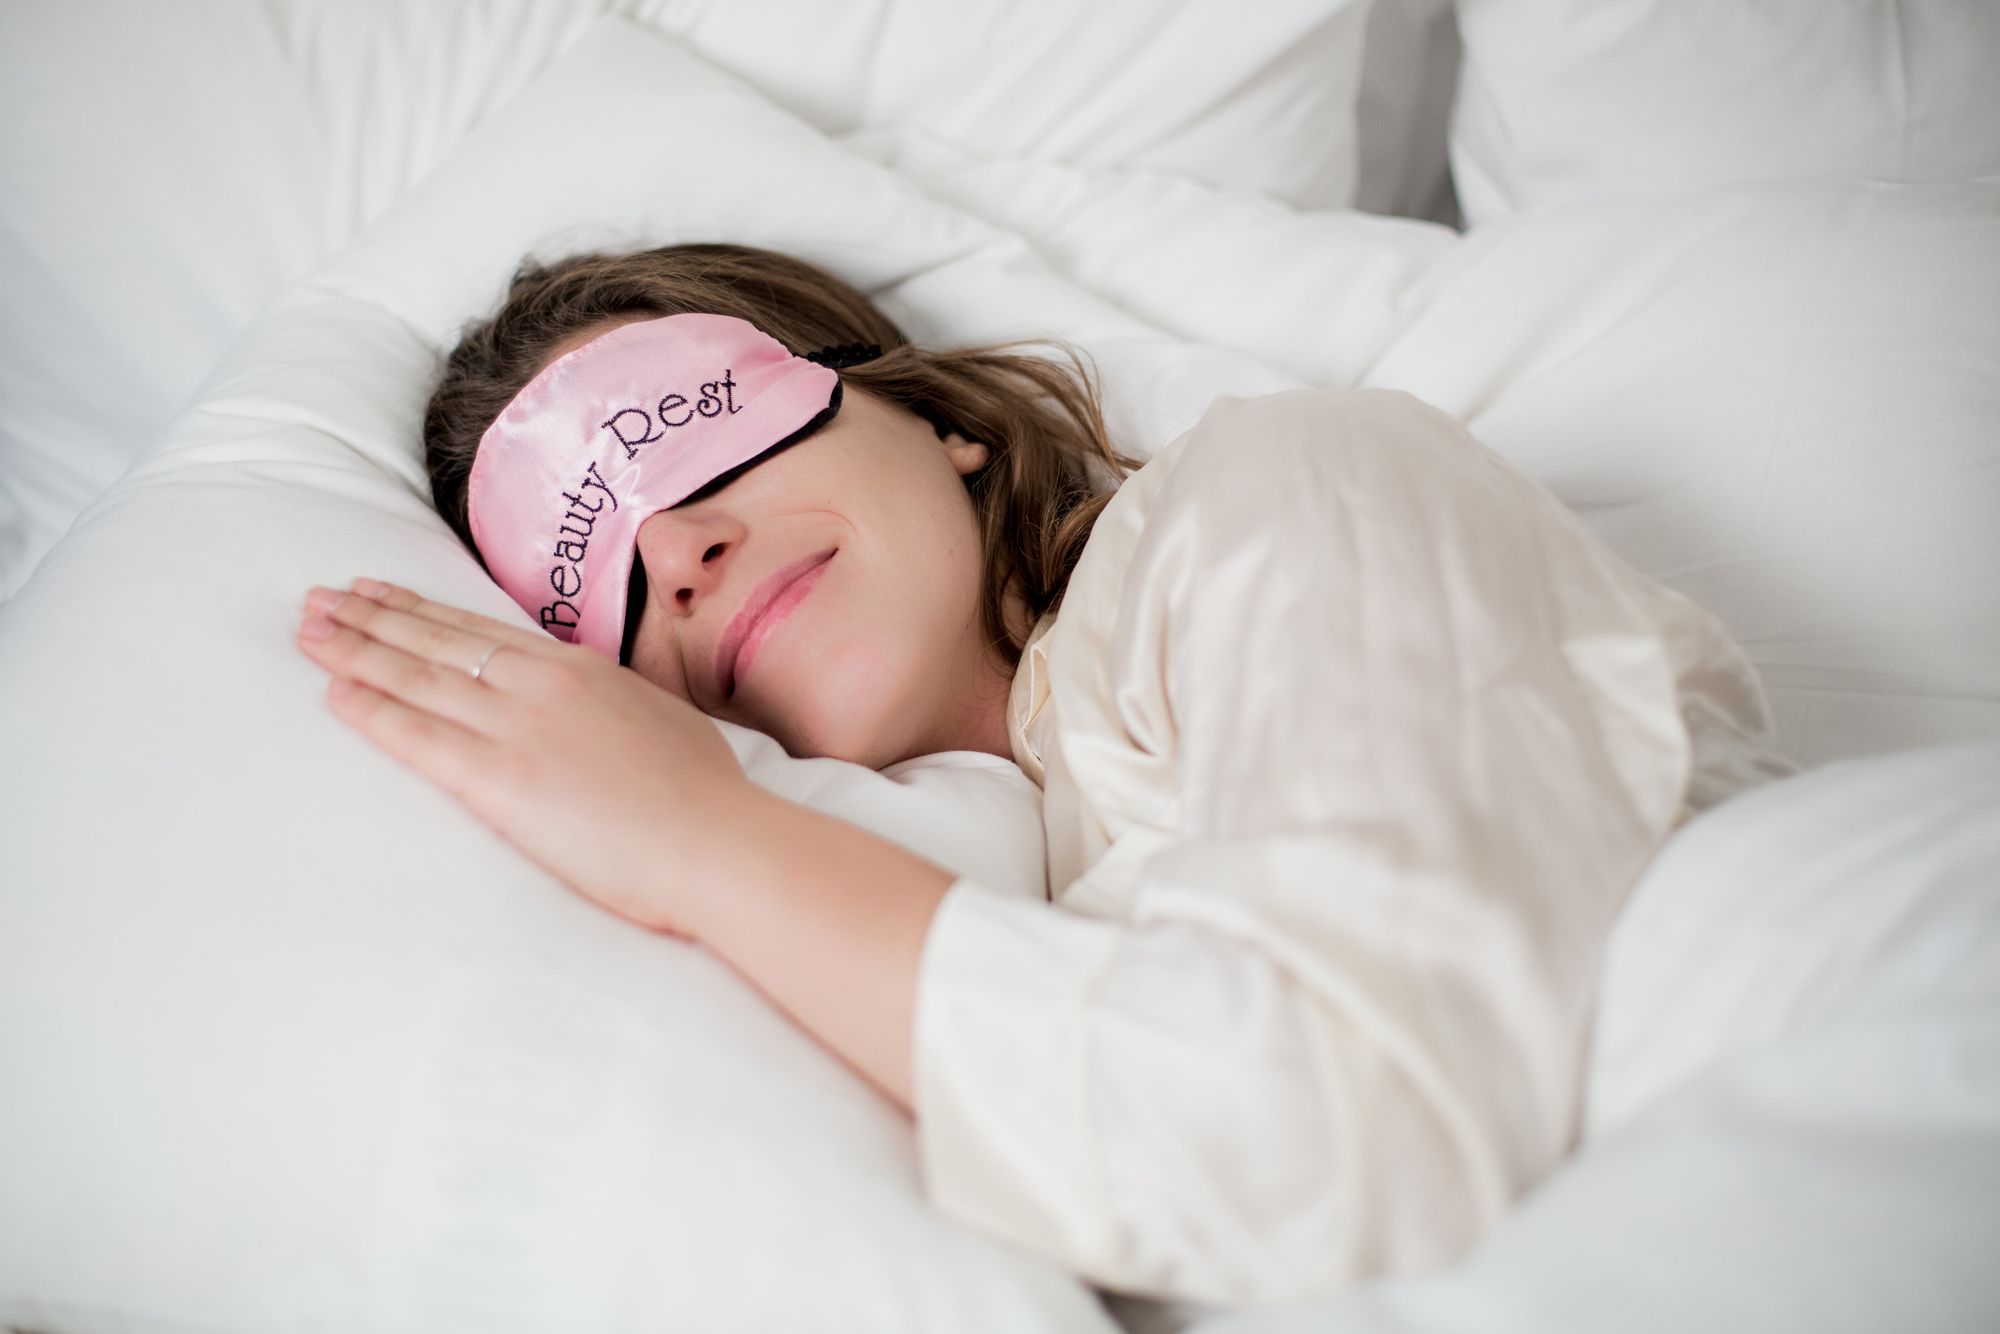 Guide to Hiring a Virtual Sleep Coach for Better Sleep & Wellness